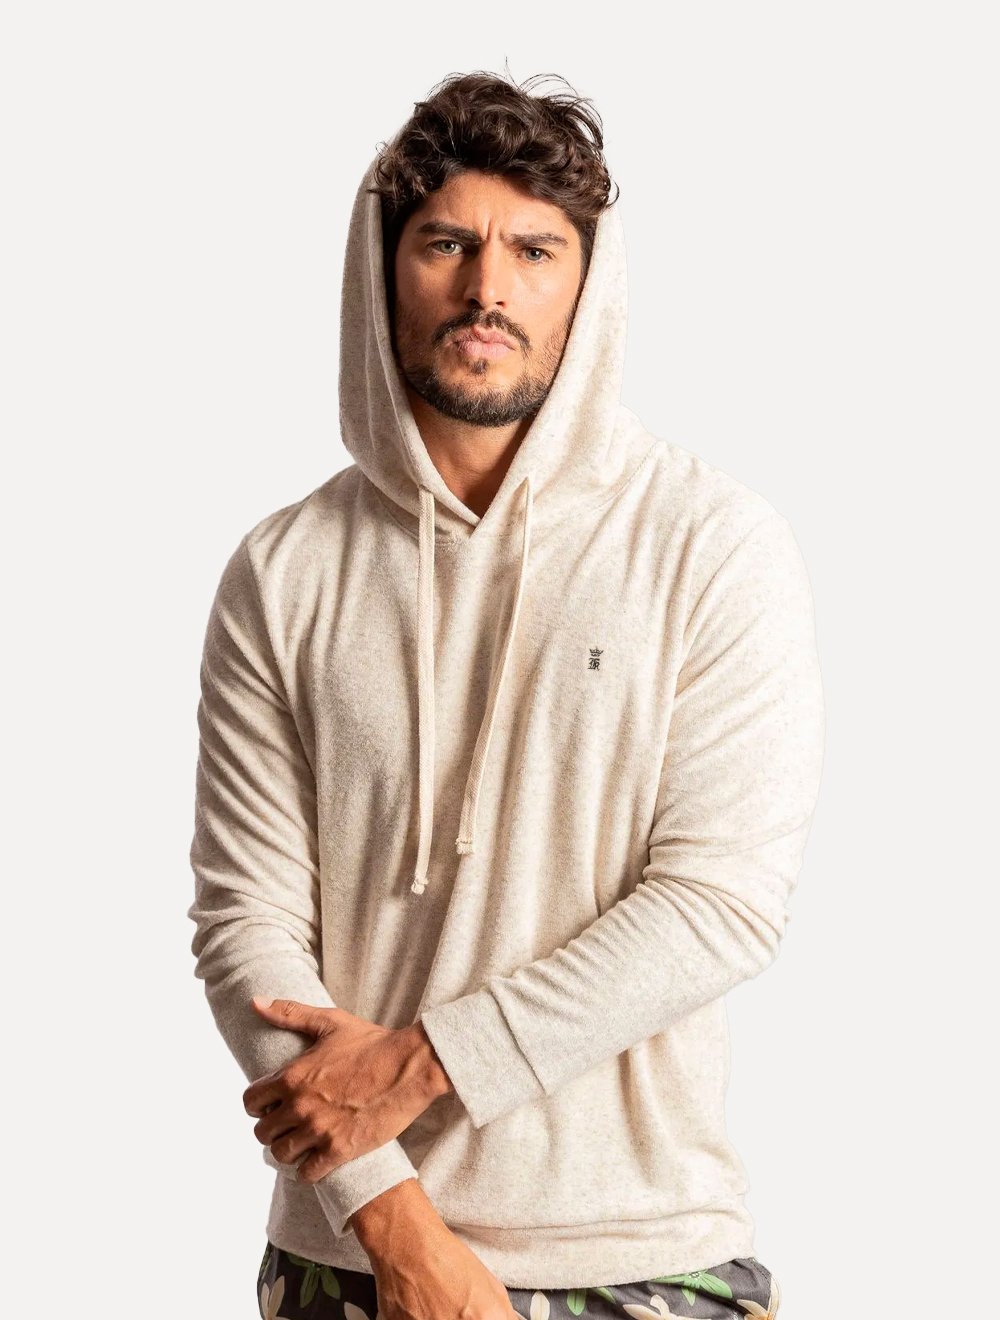 Moletom Nike Pullover Masculino - Off White